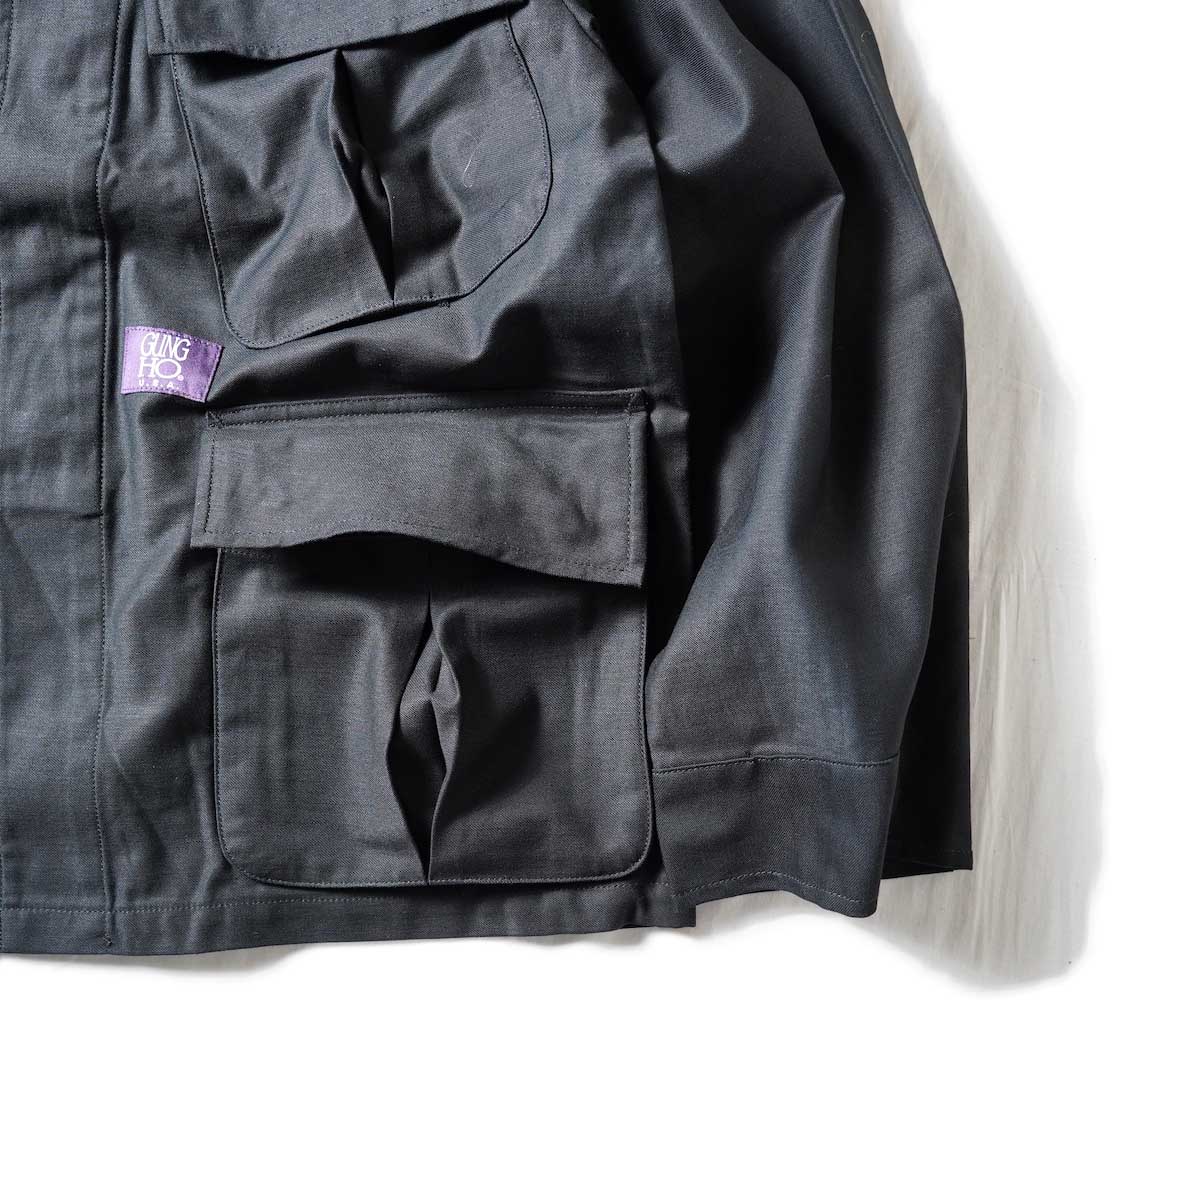 UNIVERSAL PRODUCTS / Gung Ho Fatigue Jacket (Black)裾、袖